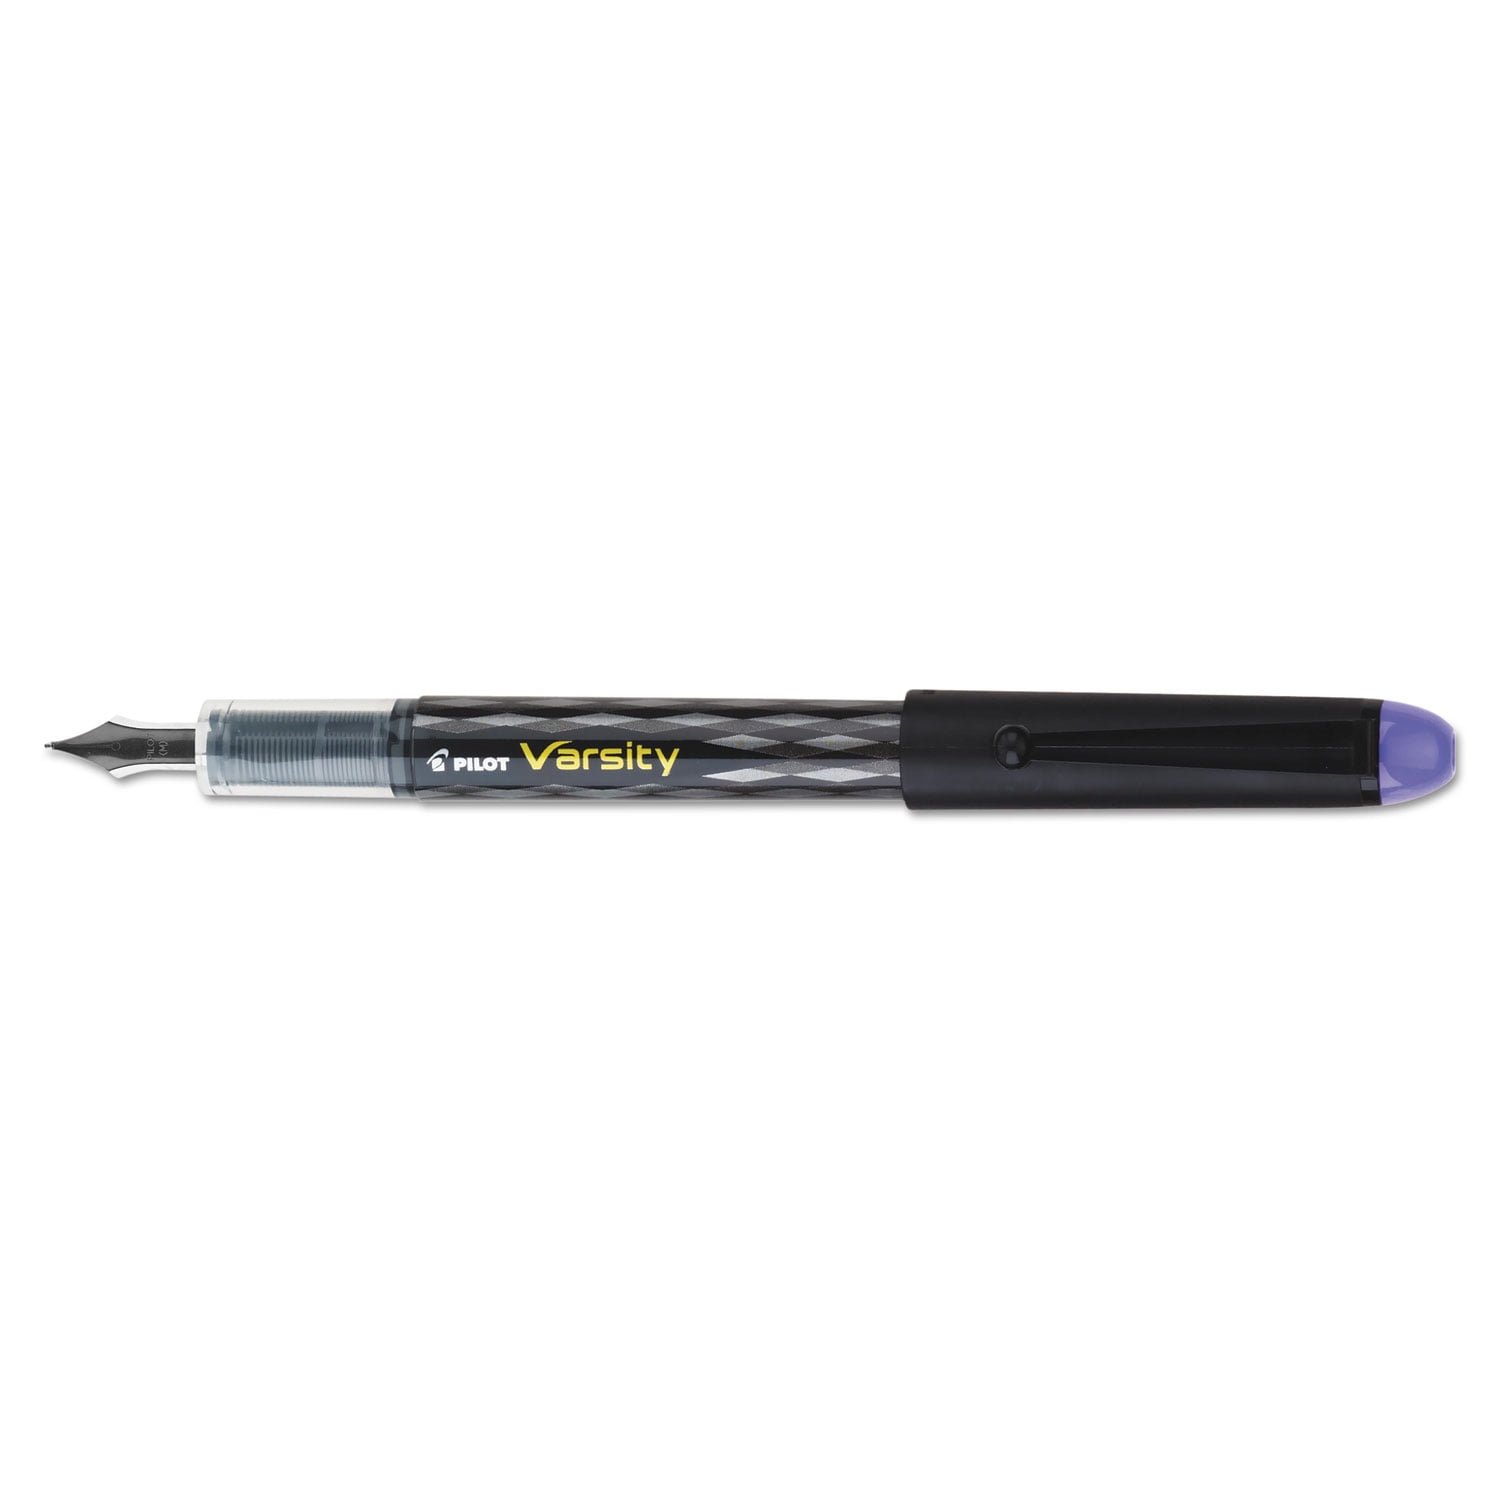 Pack of 6 Medium Point Varsity Disposable Fountain Pen Black Barrel/Purple Ink